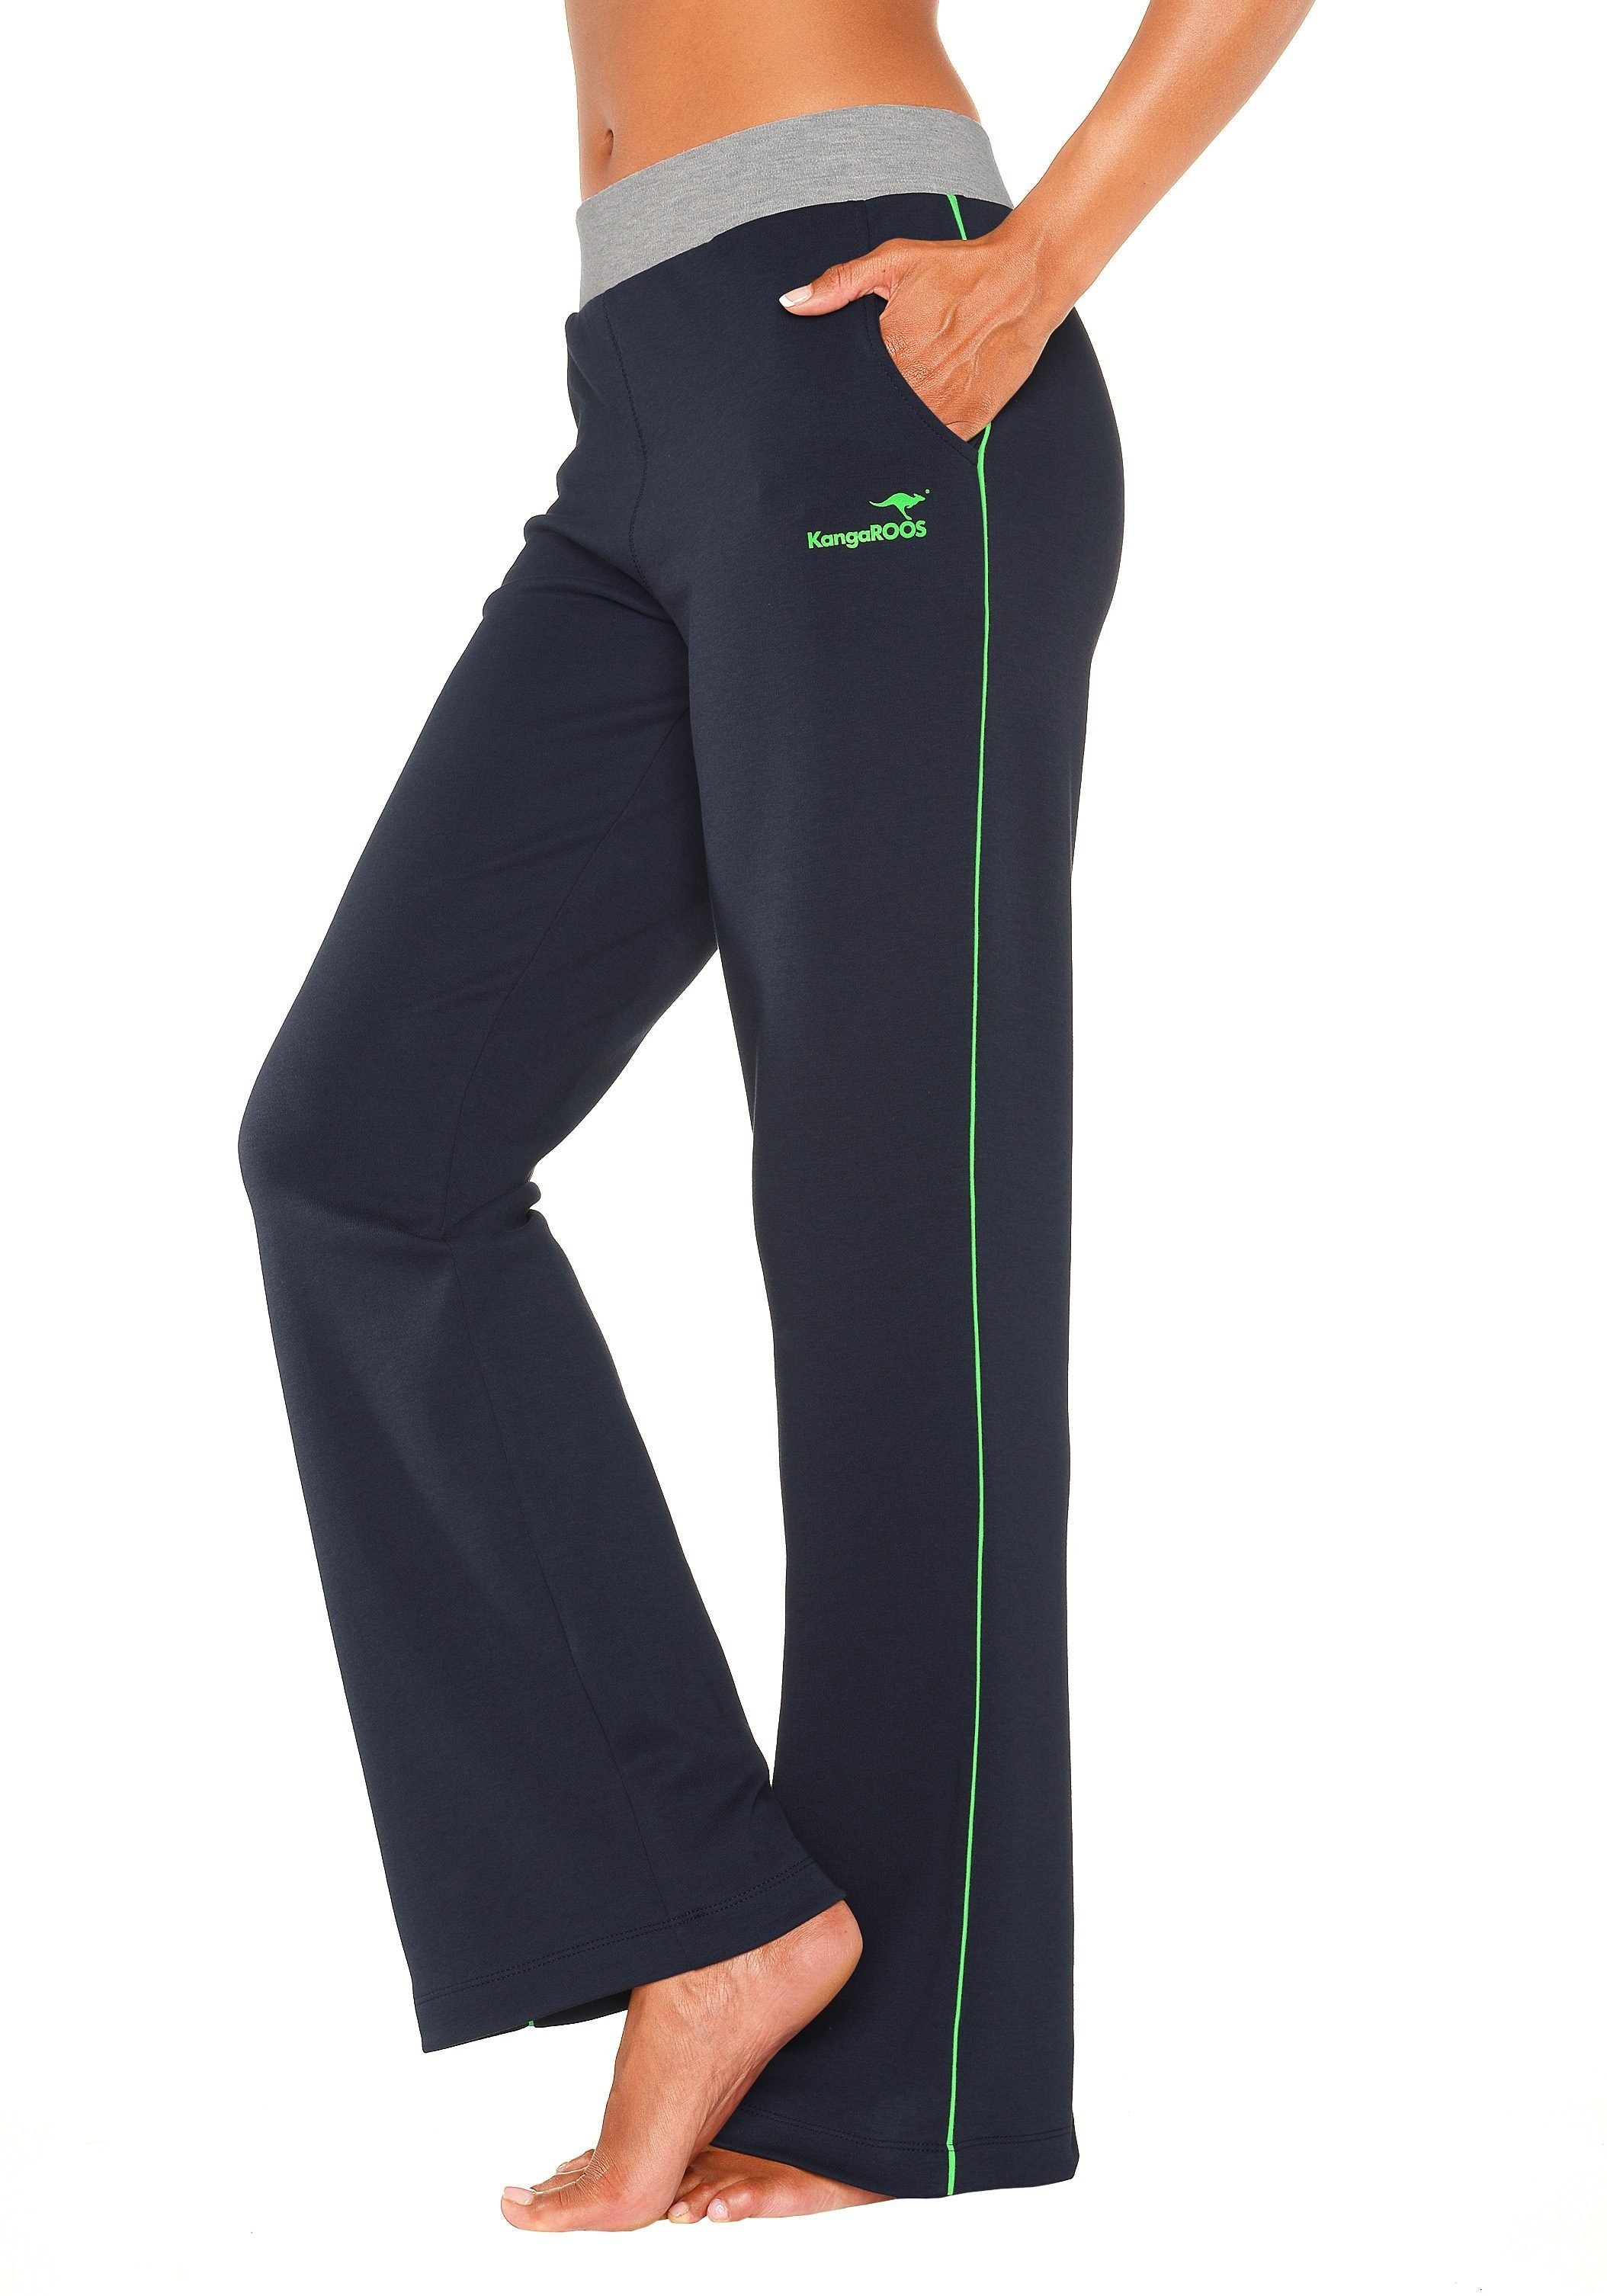 KangaROOS Relaxhose mit Bund, breitem marine-grün-grün Loungewear, Loungeanzug